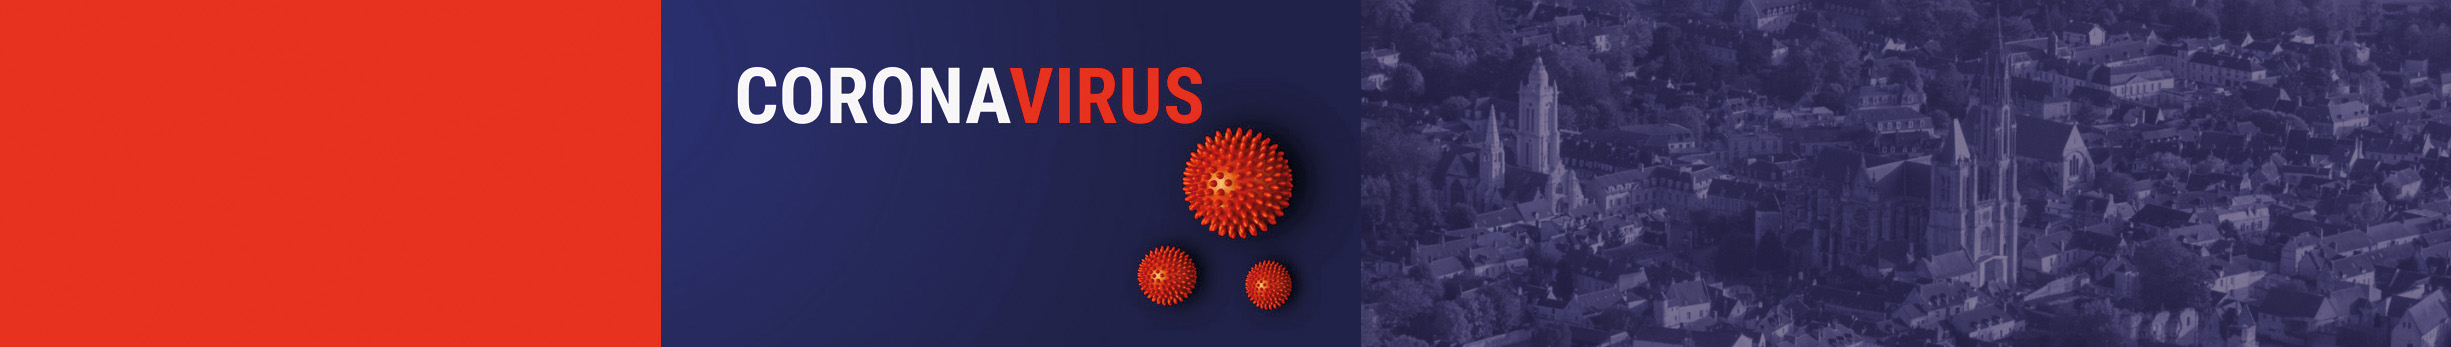 Coronavirus - Compositions